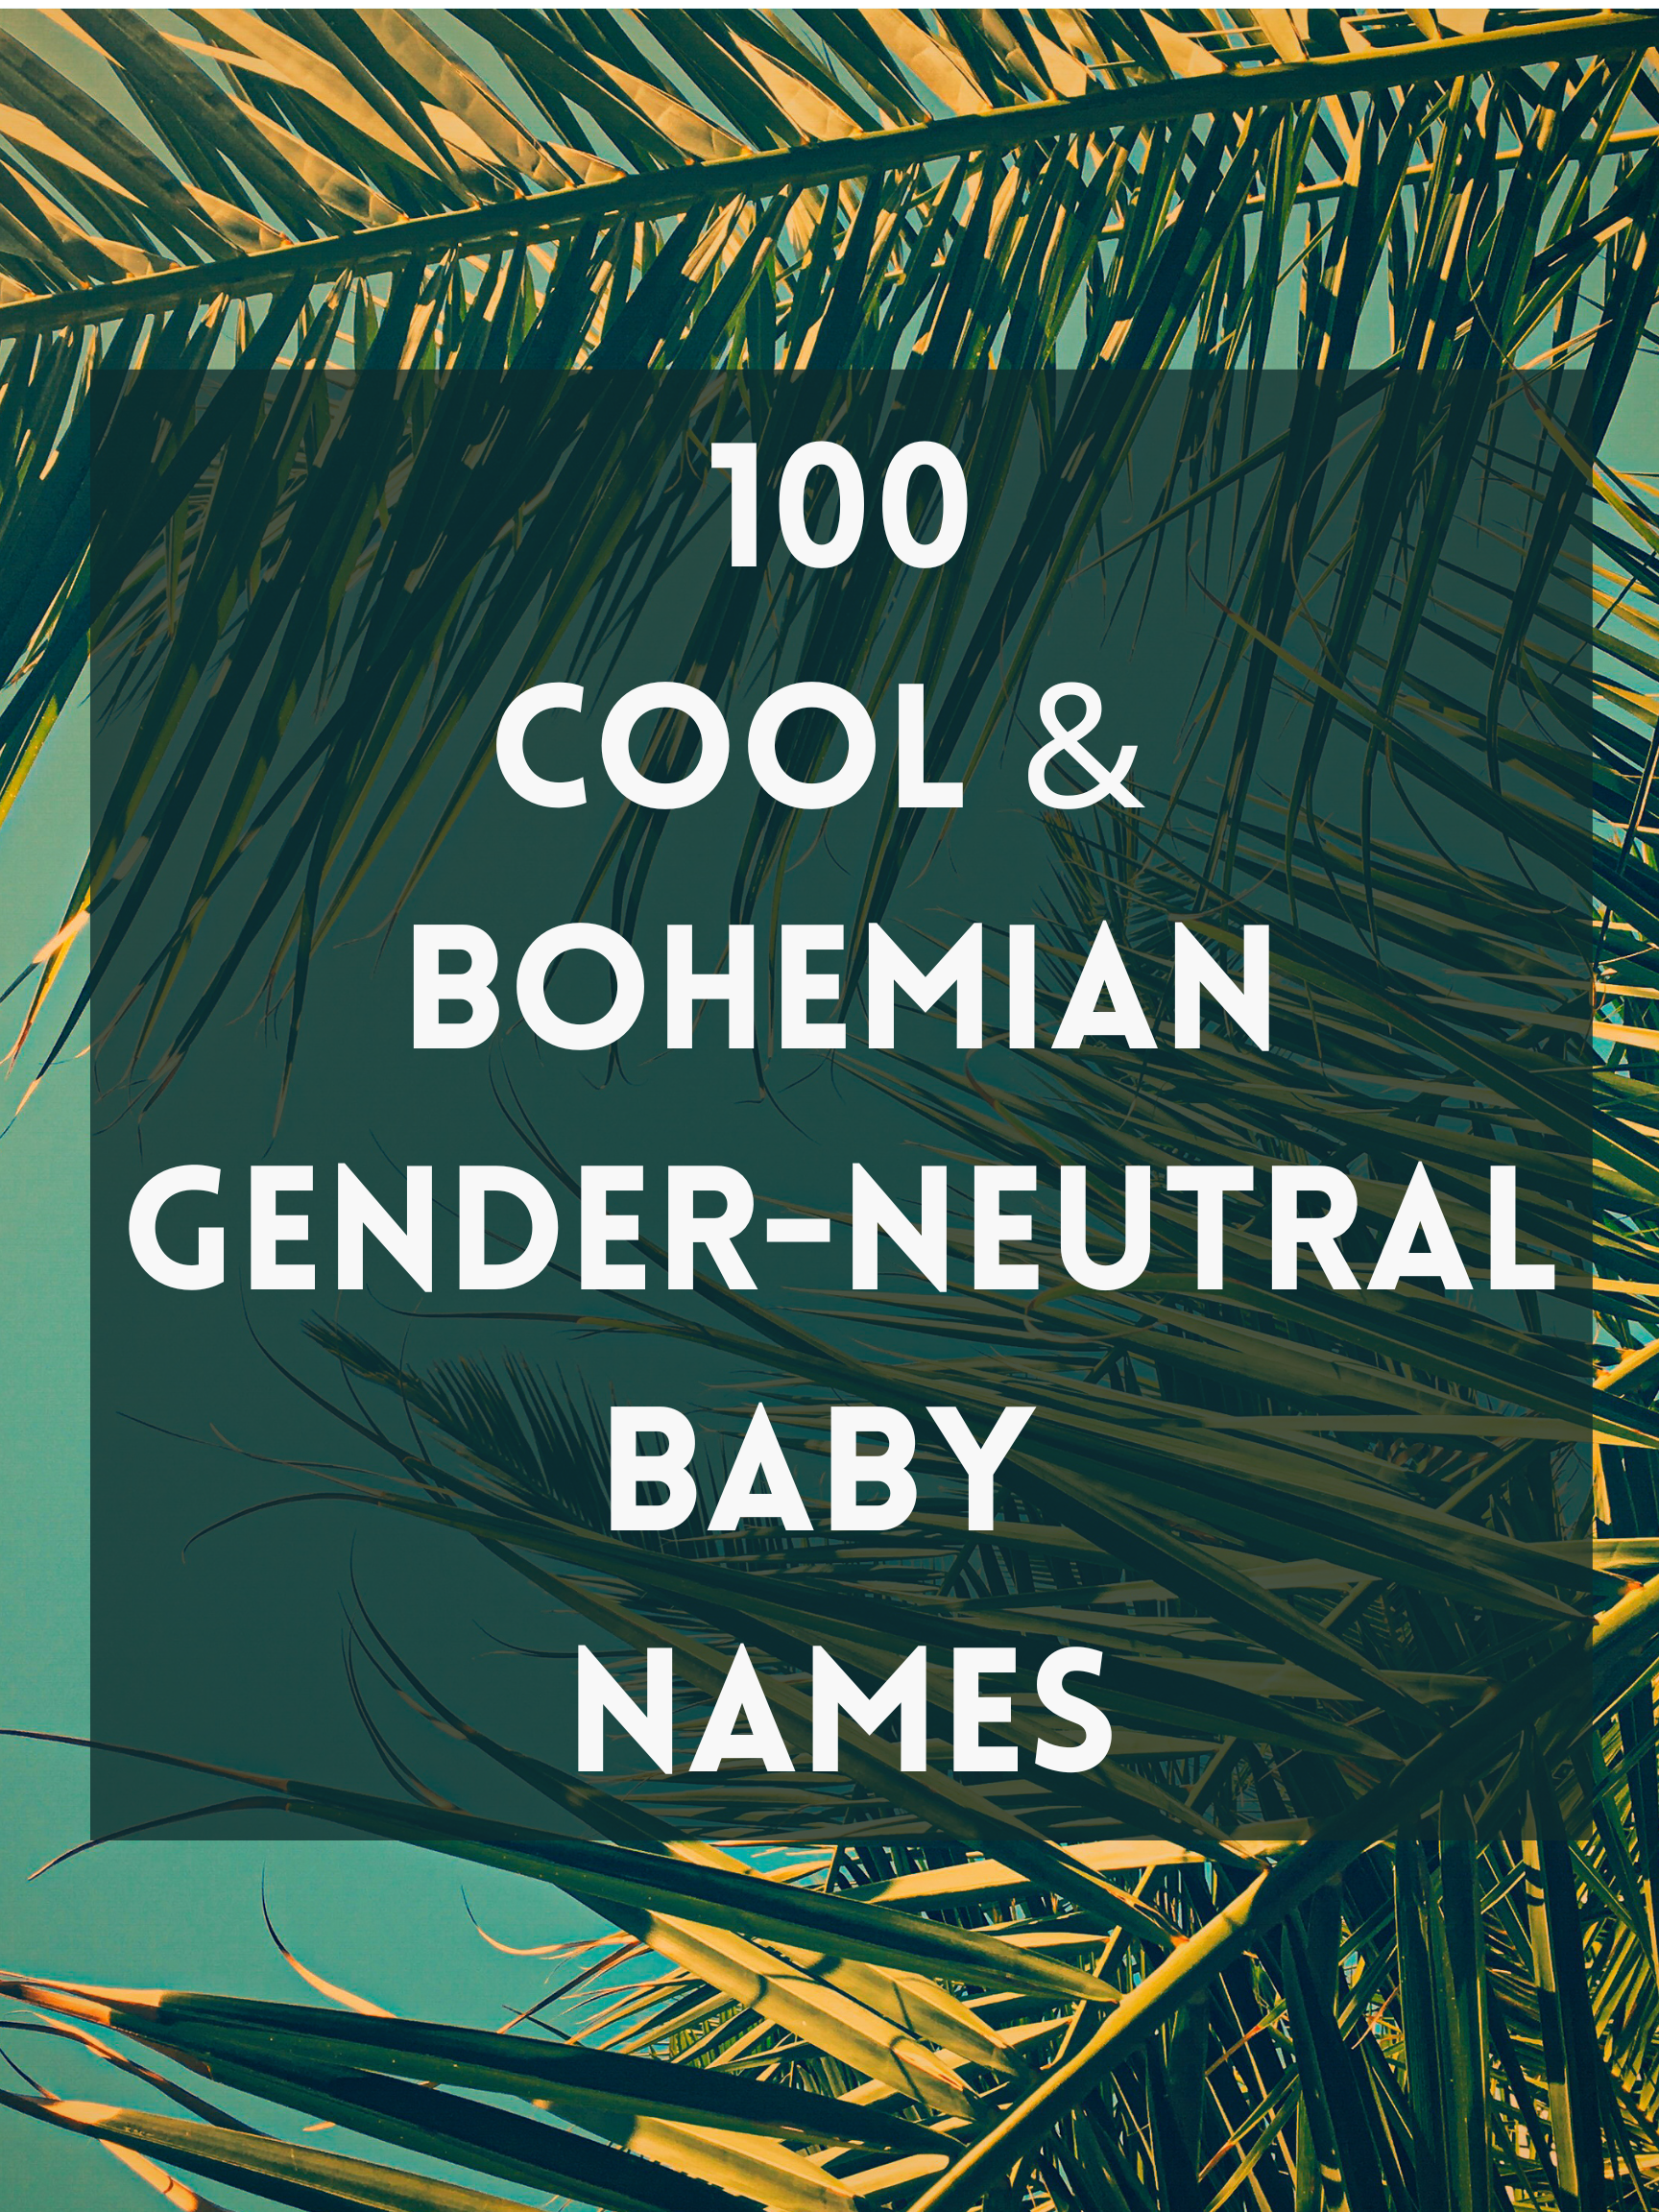 100 Cool & Bohemian Gender-Neutral Baby Names